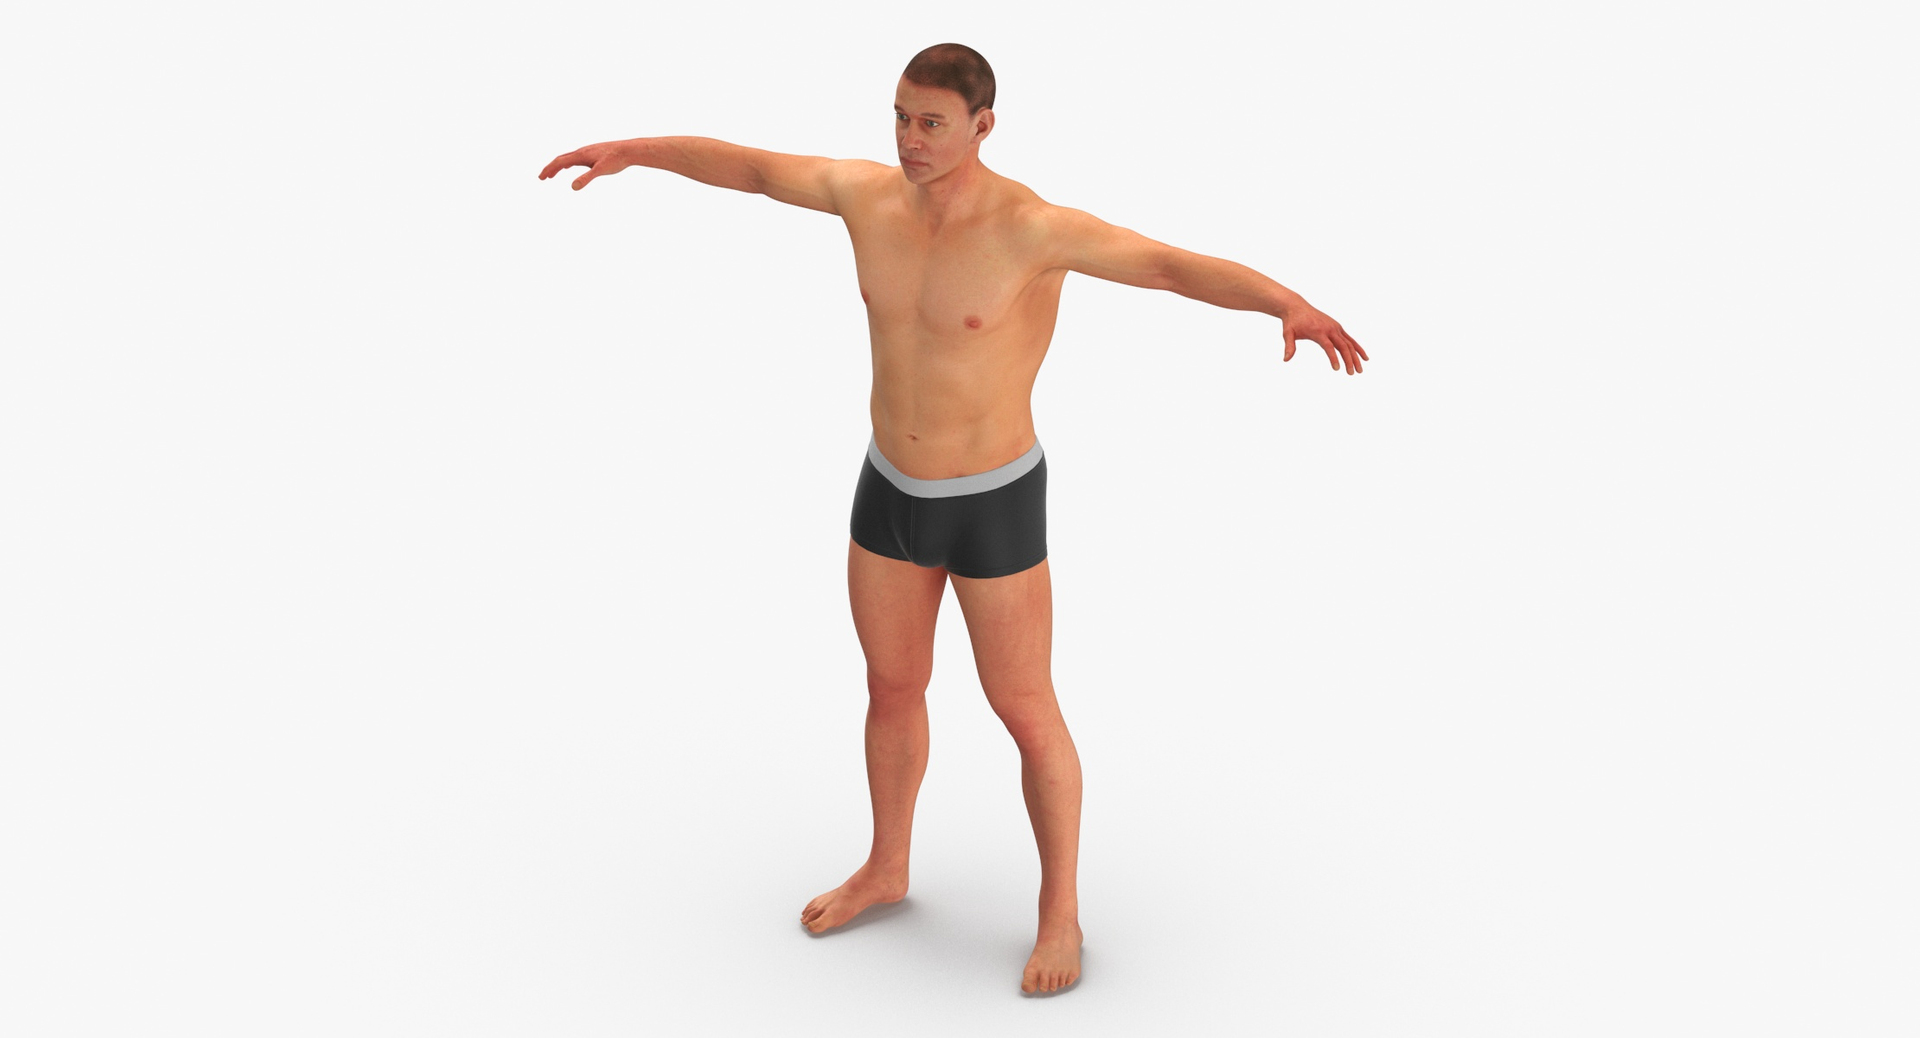 3d scan t-pose stock rigged model blender maya viking, Stable Diffusion